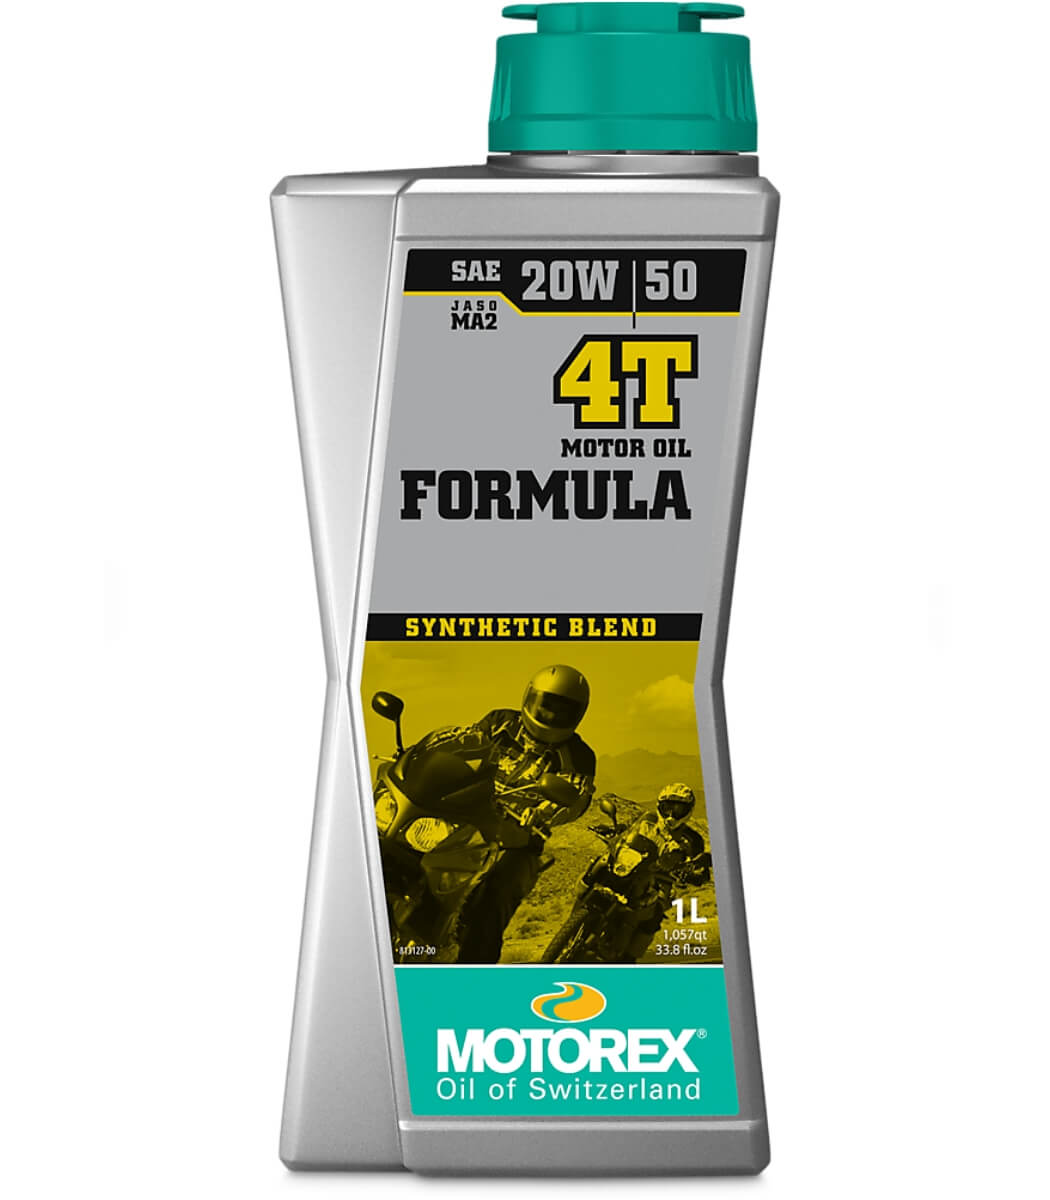 Motorex 4T Formula 20W/50 HD